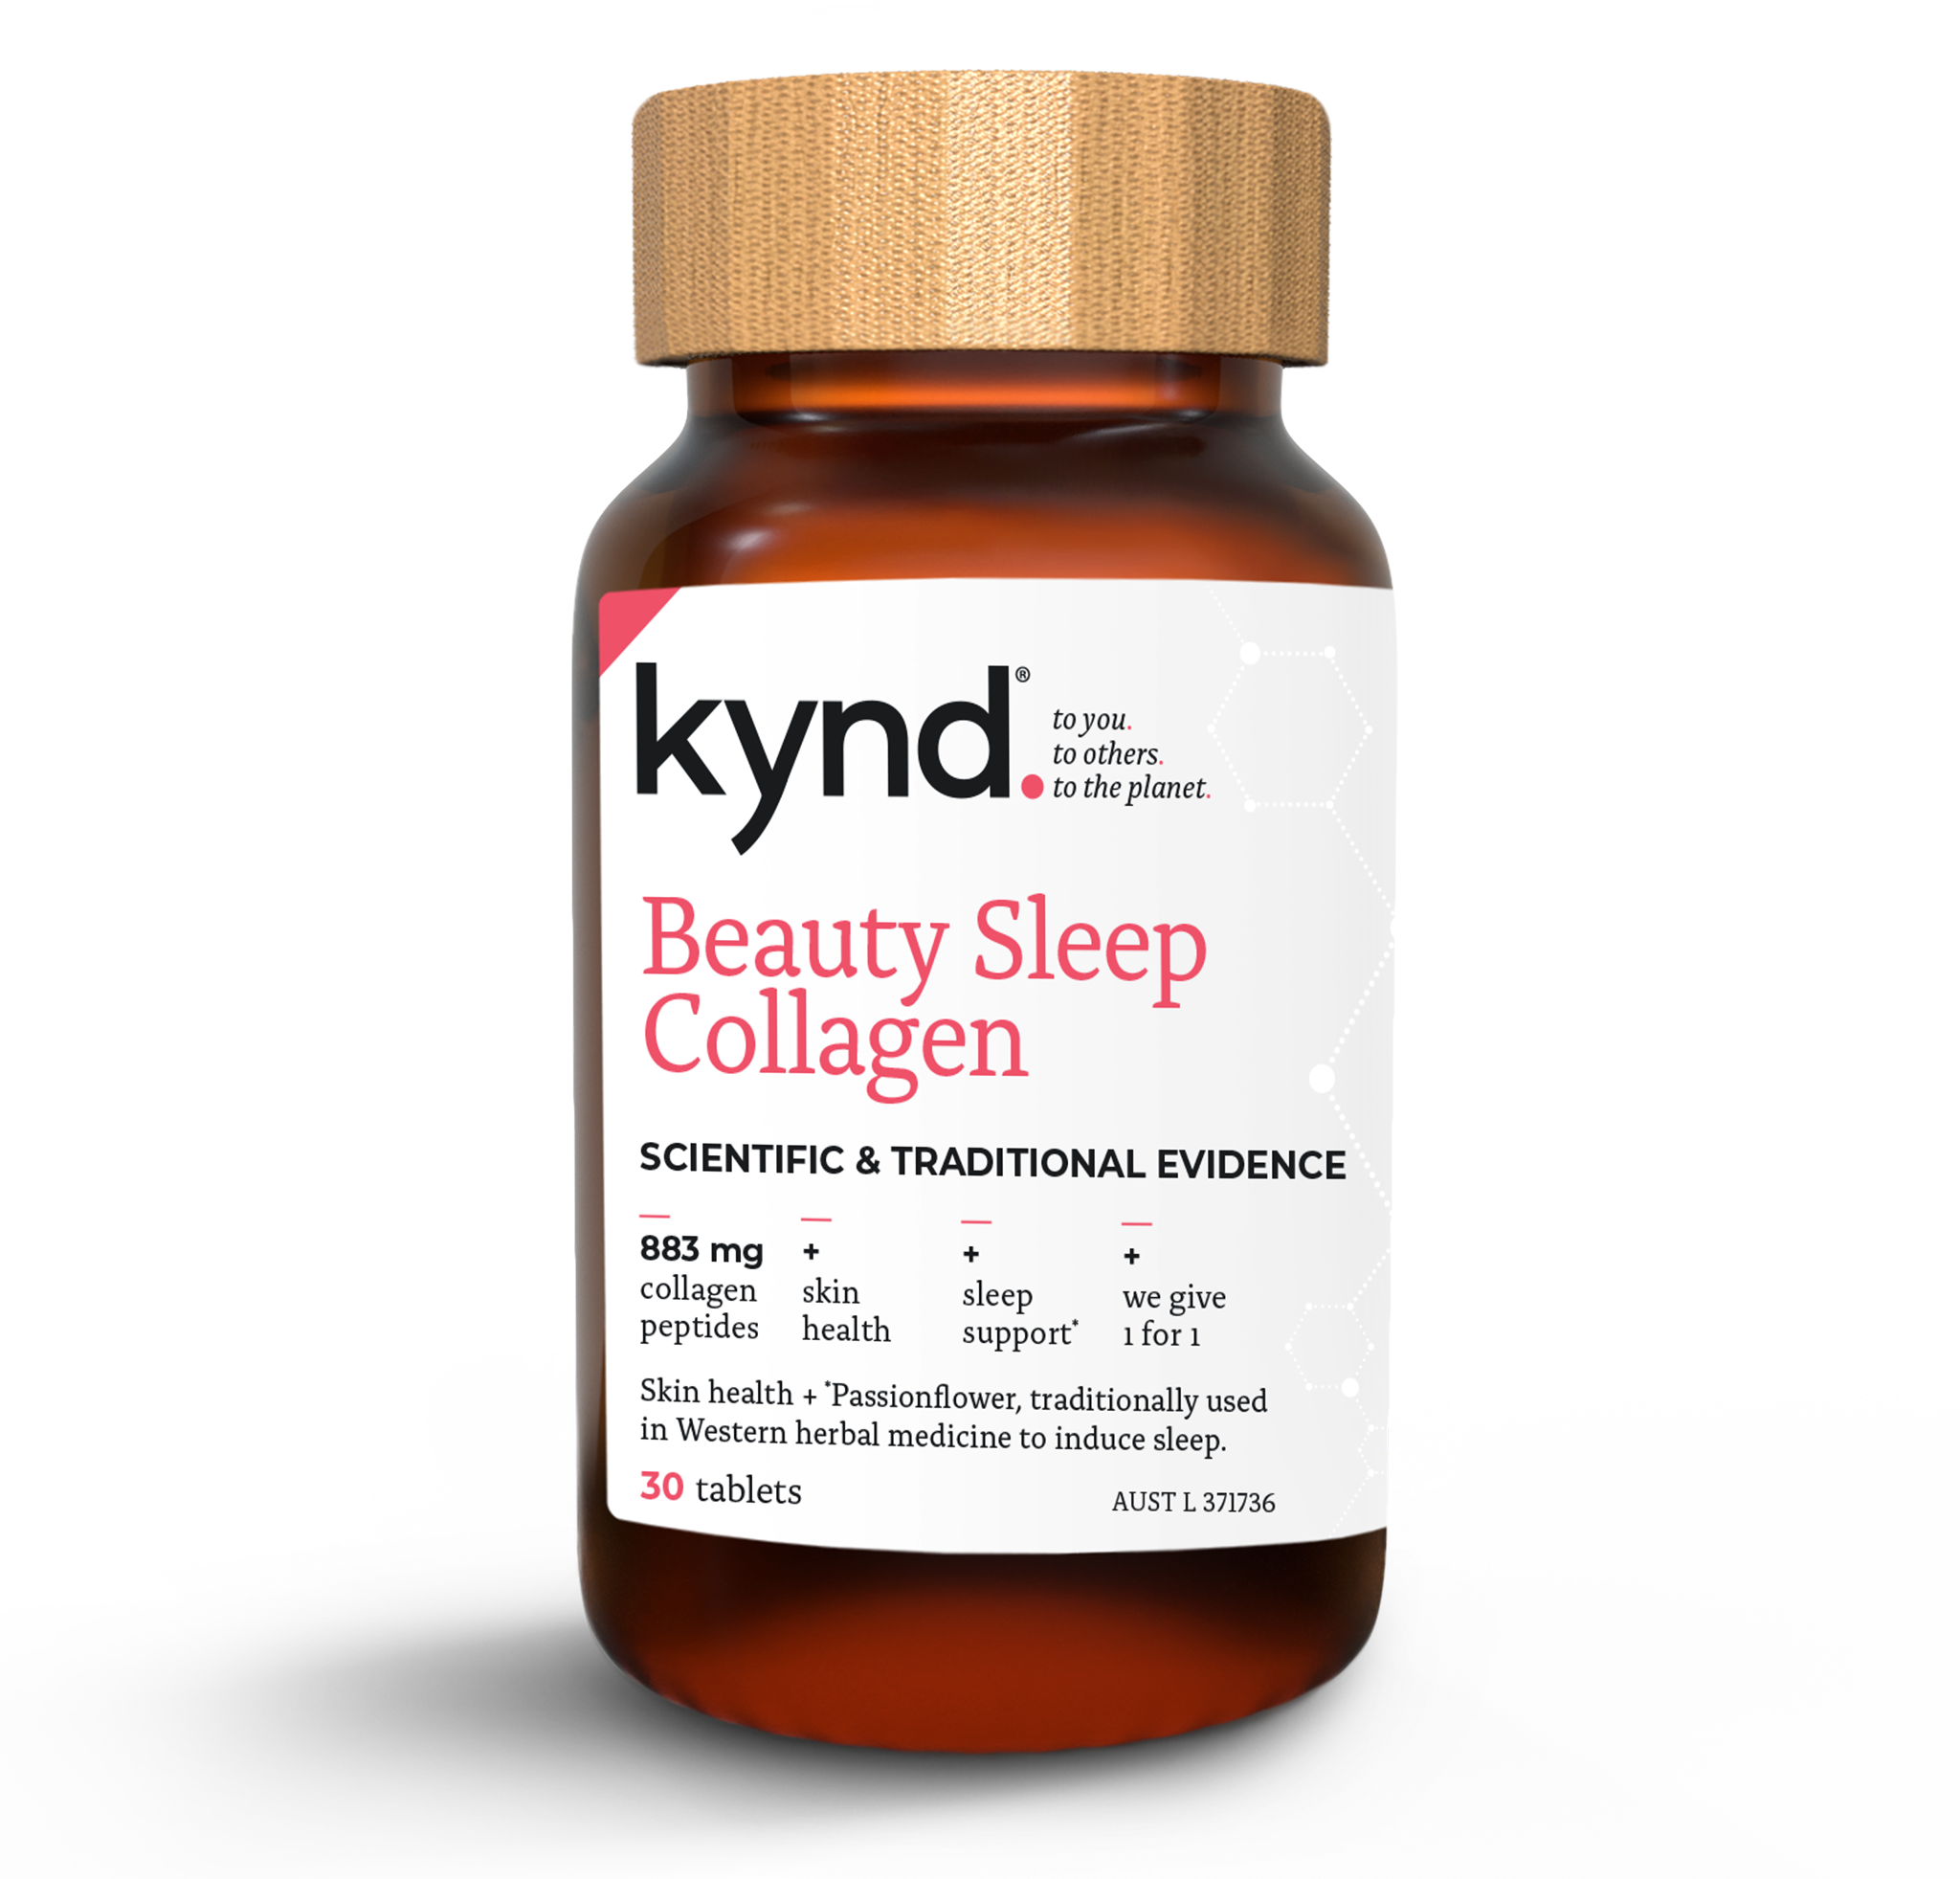 Kynd Beauty Sleep Collagen | Supplement | Scientific & Traditional Evidence - Skin Health, Sleep Support